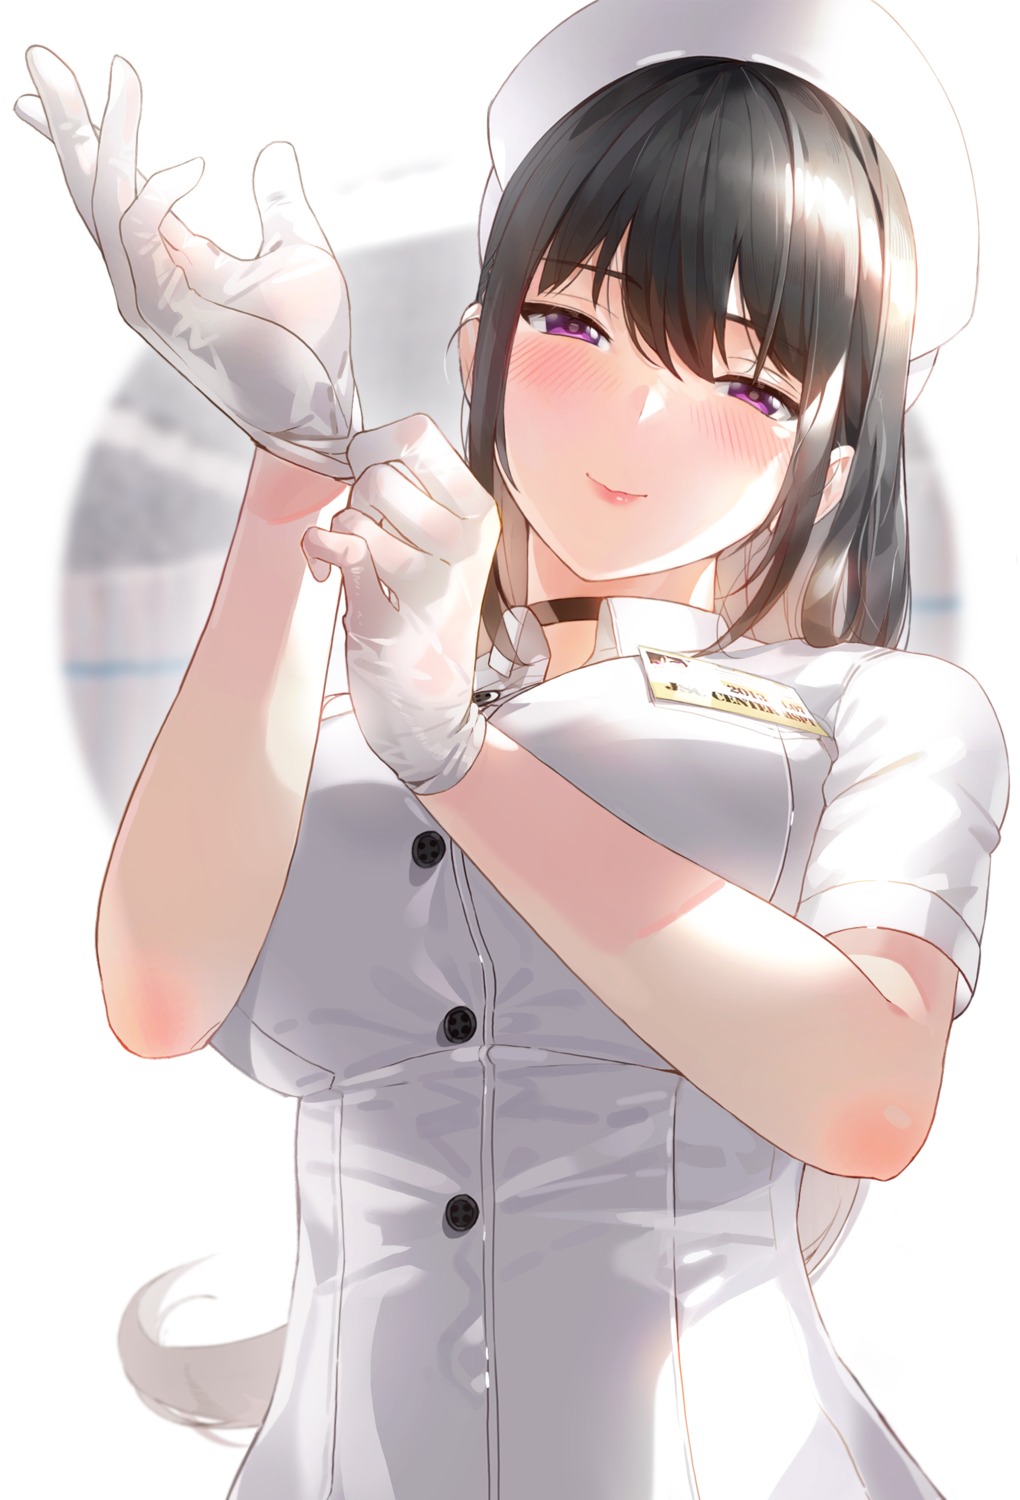 kfr nurse